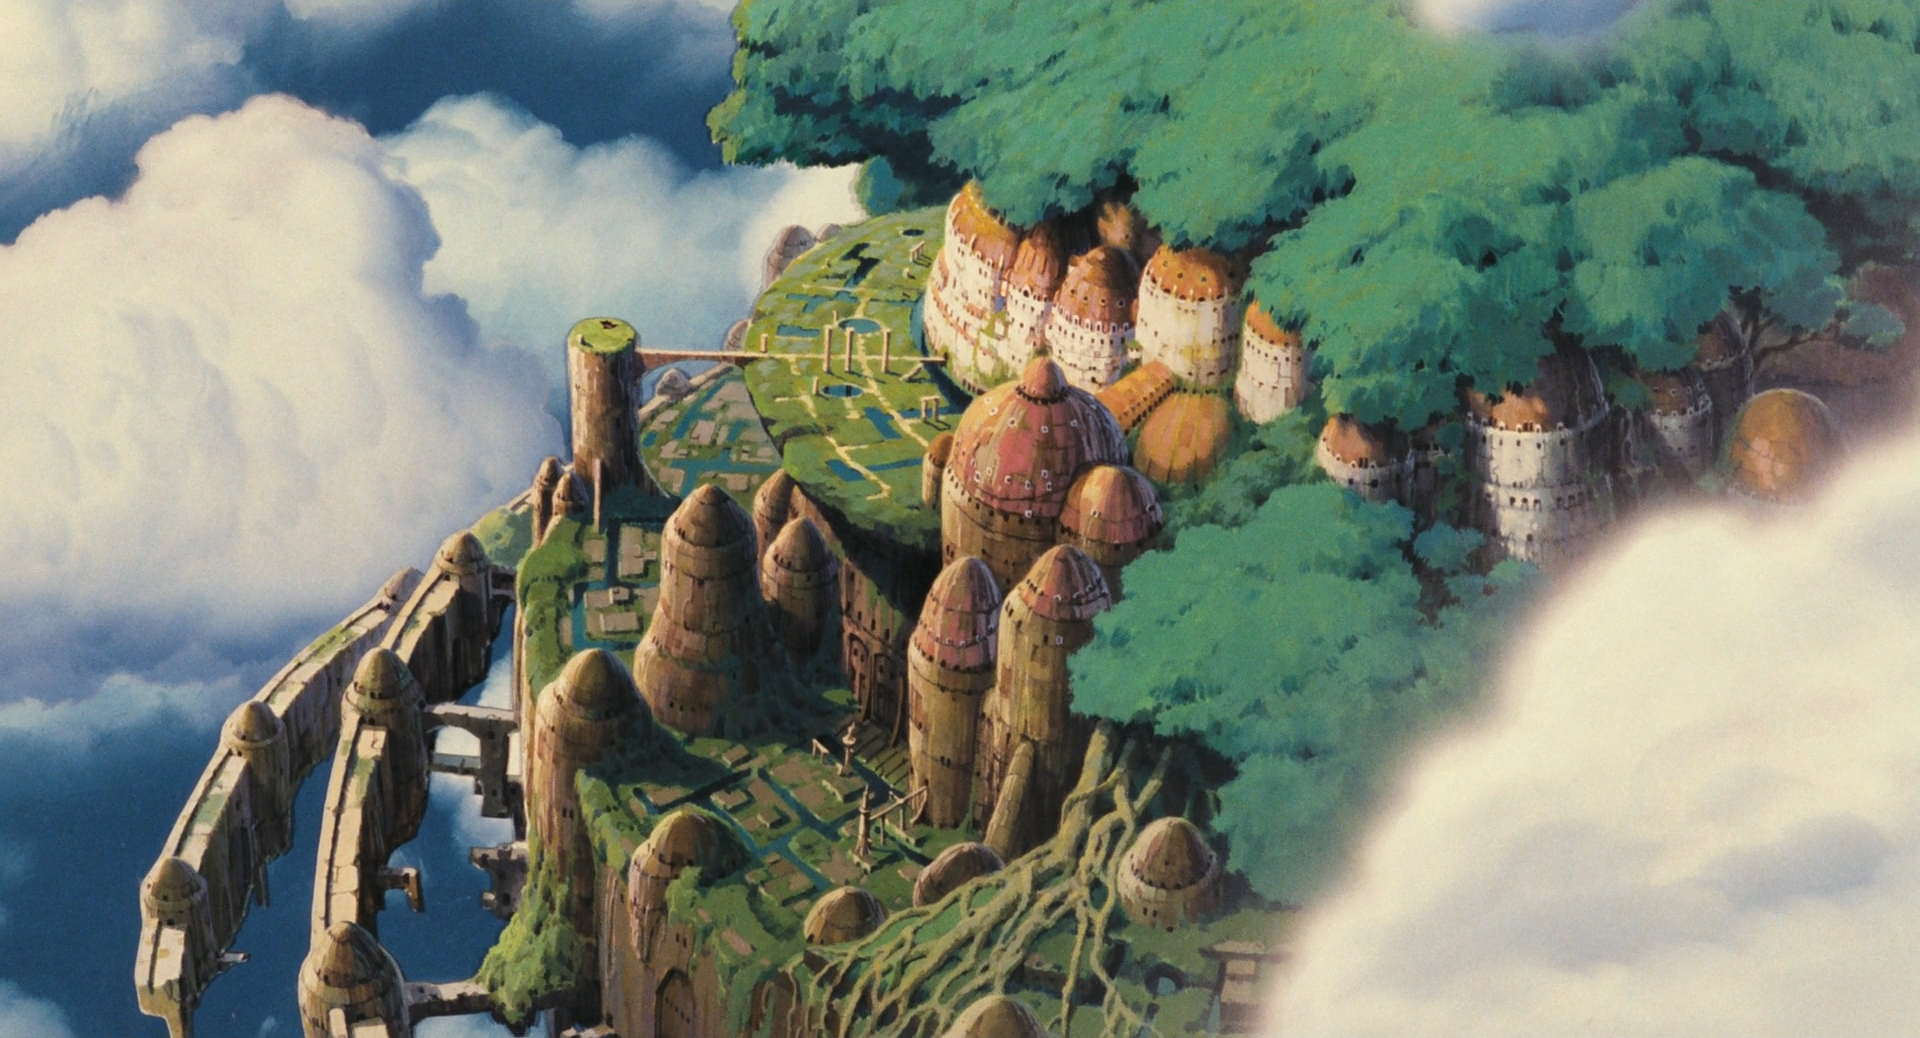 Photo Taken From Studio Ghibli 'Castle in The Sky'